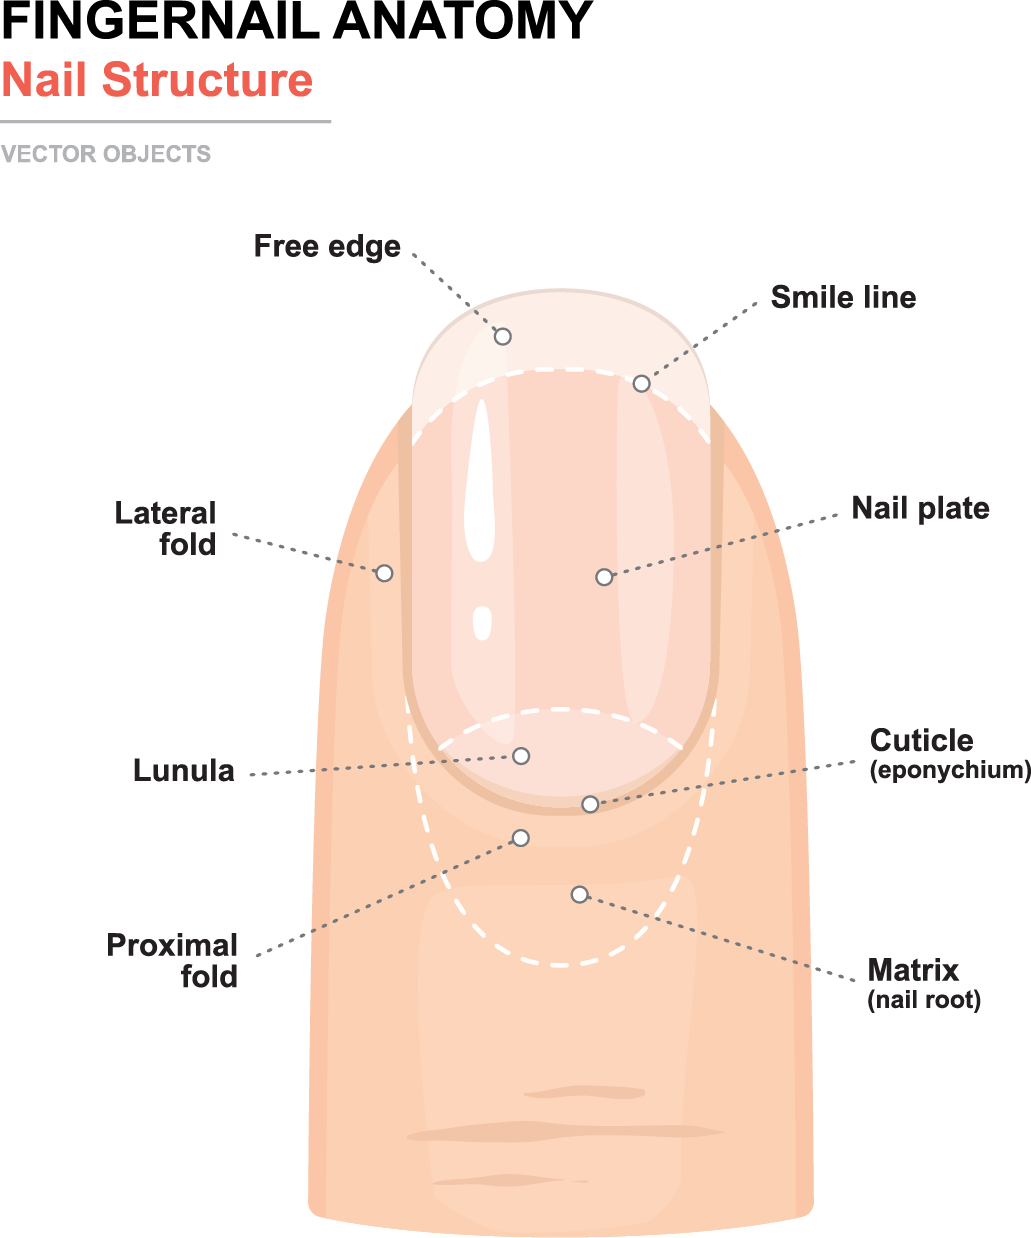 illustration showing anatomy of the fingernail